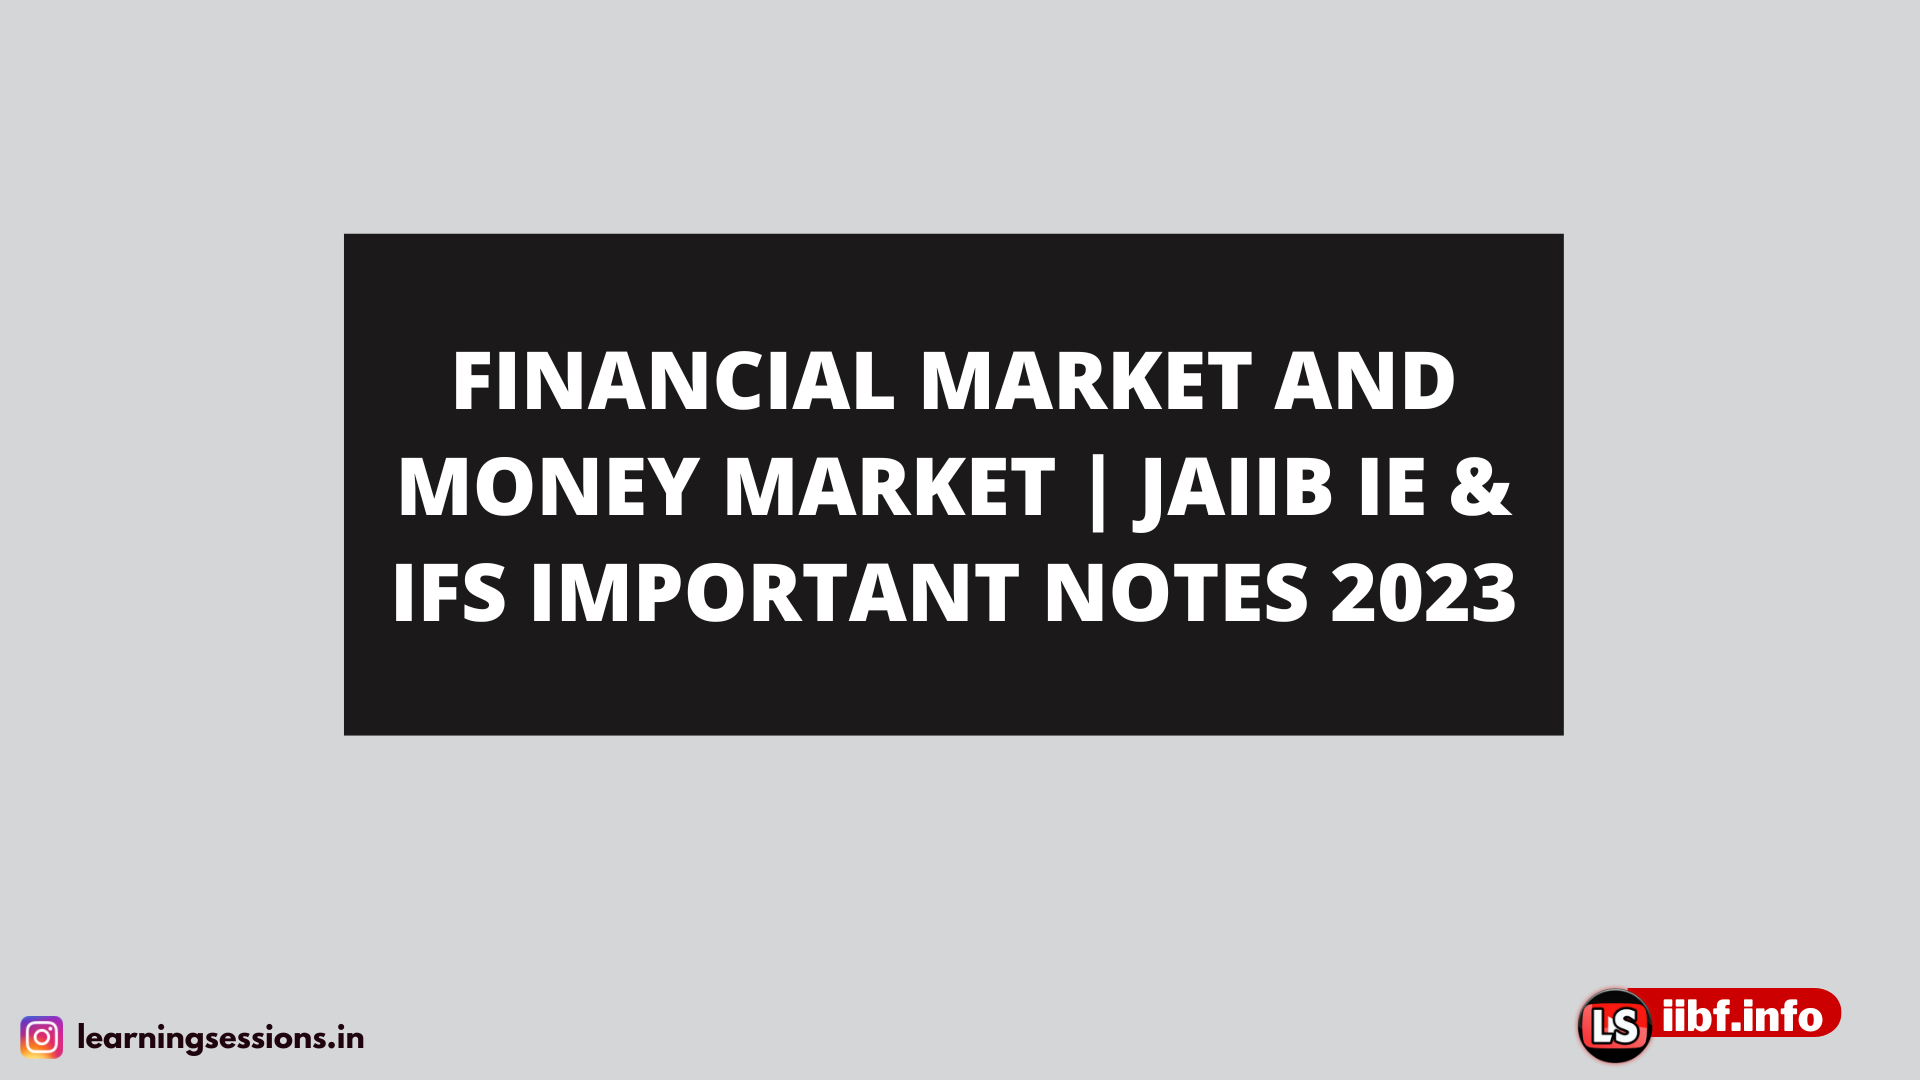 FINANCIAL MARKET AND MONEY MARKET | JAIIB IE & IFS IMPORTANT NOTES 2023